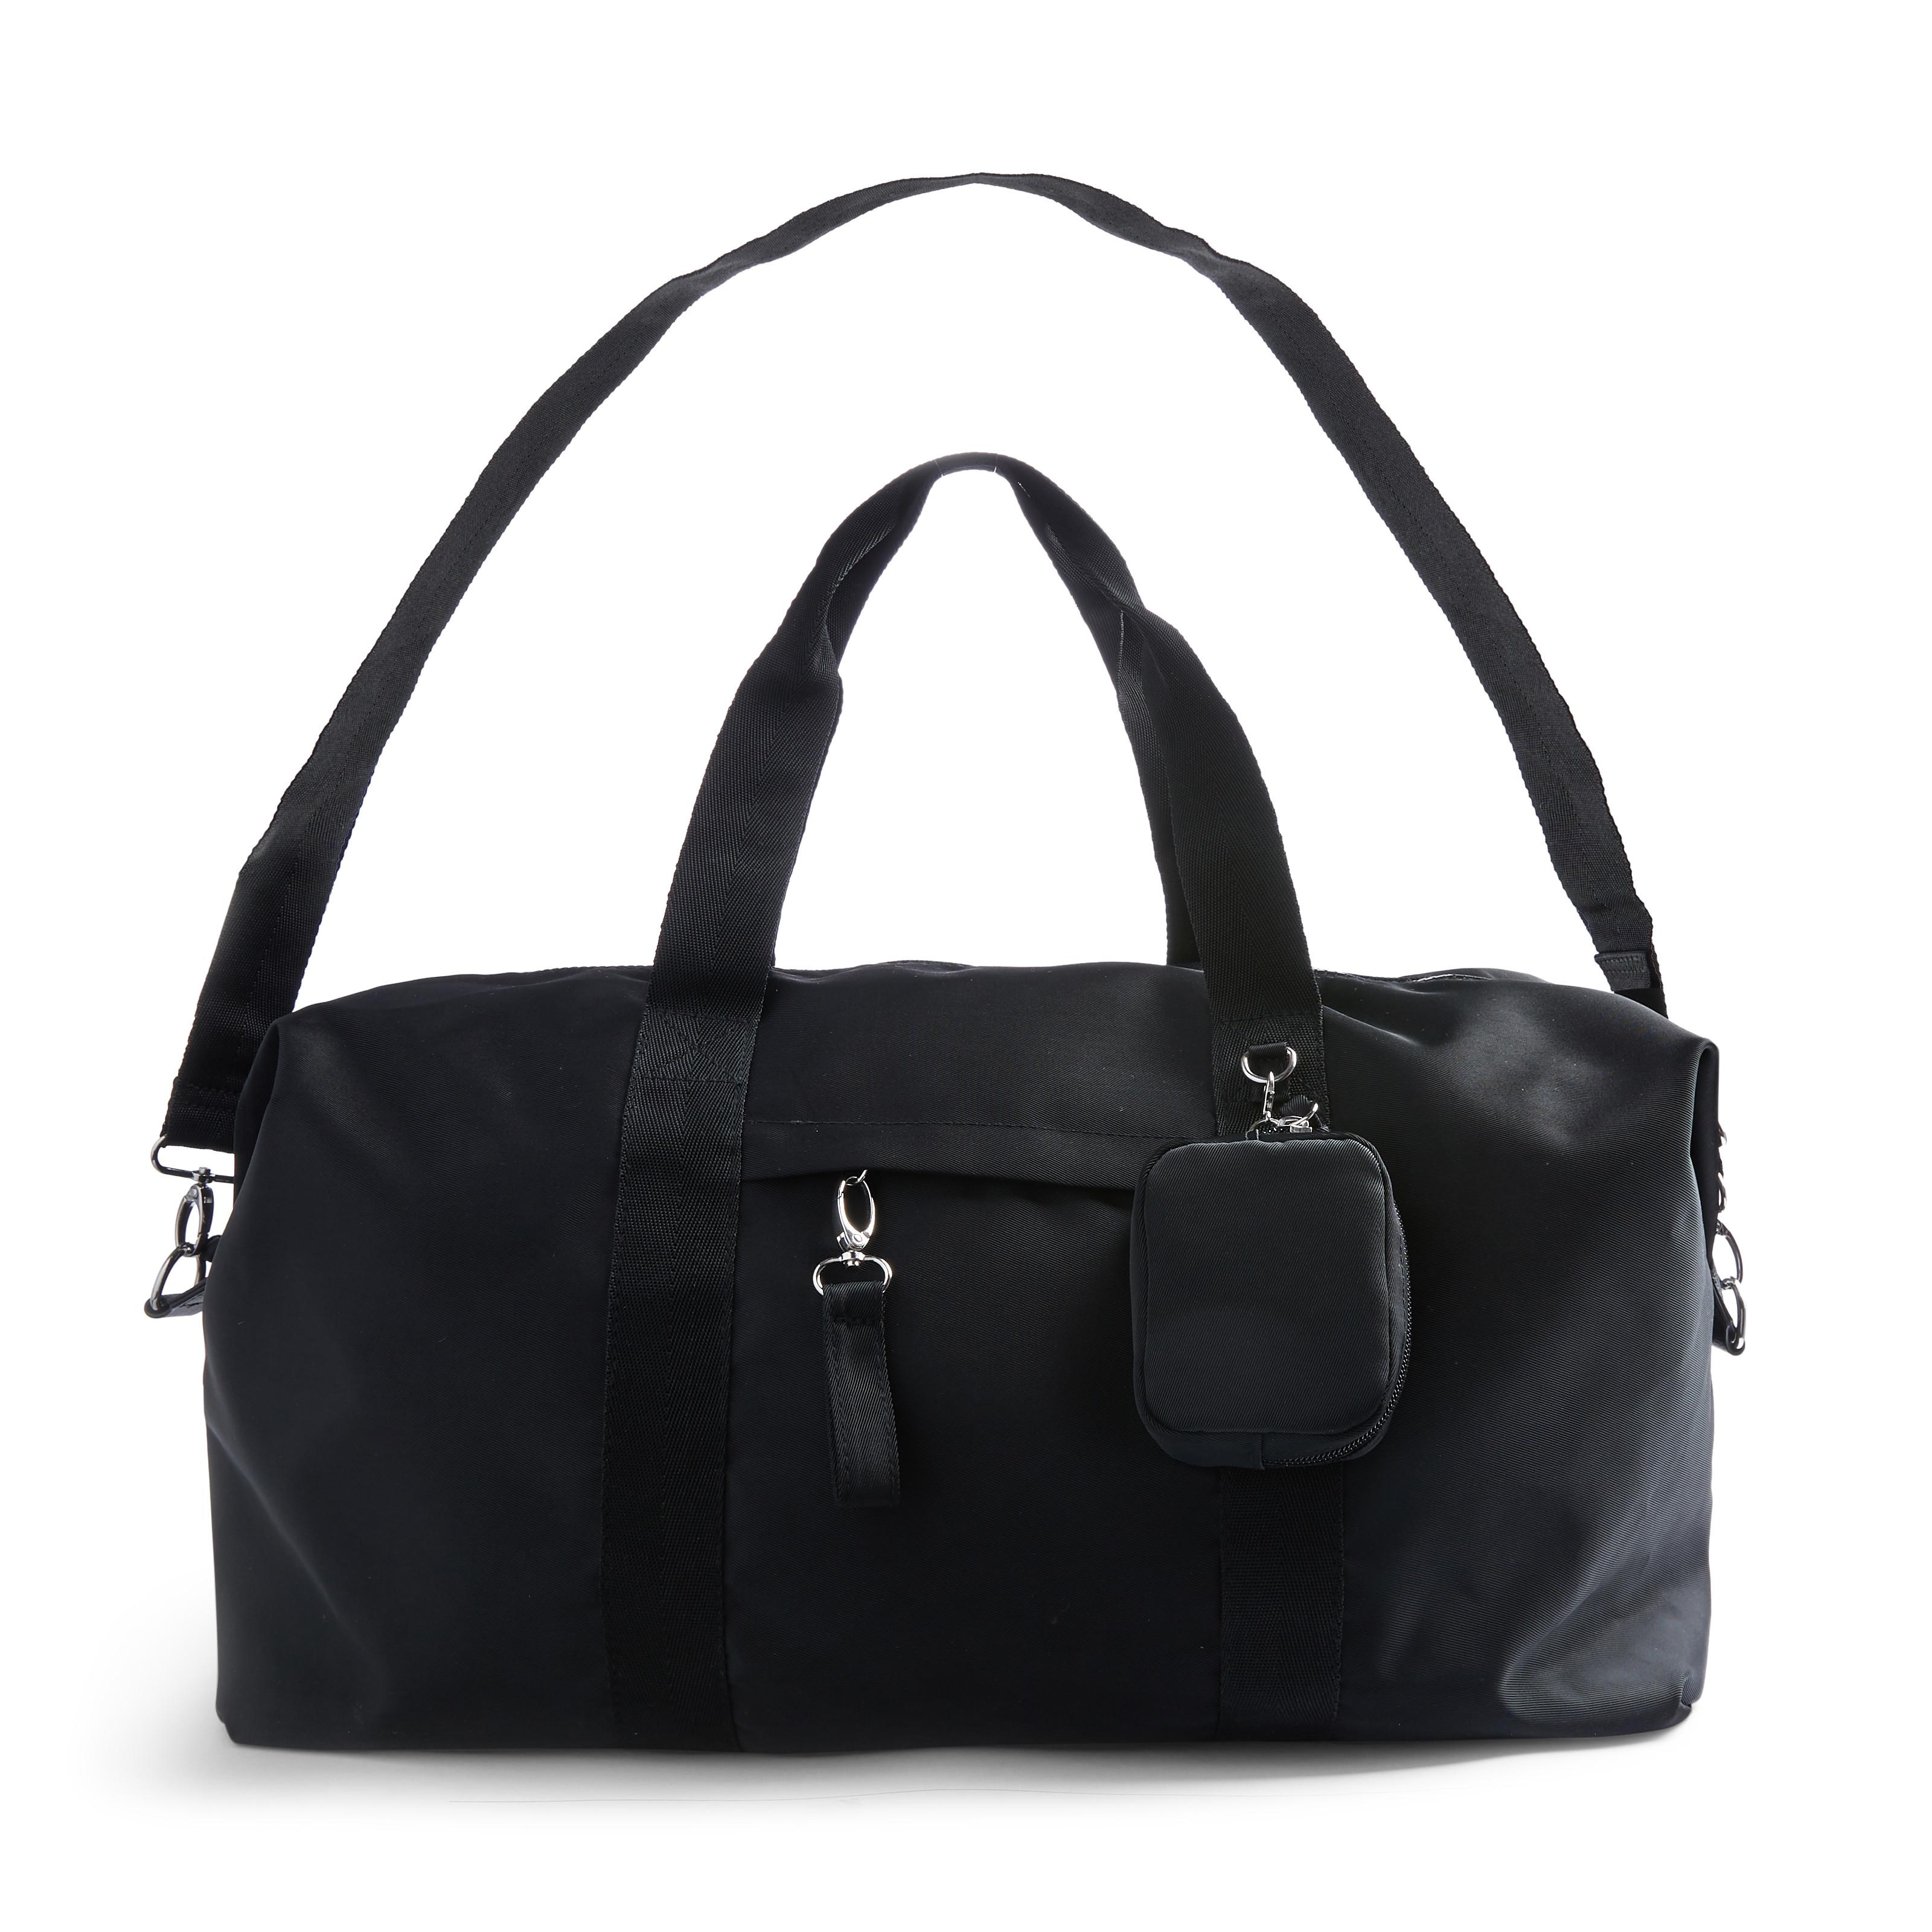 Black Twill Weekender Bag | Women's Handbags | Women's Accessories ...